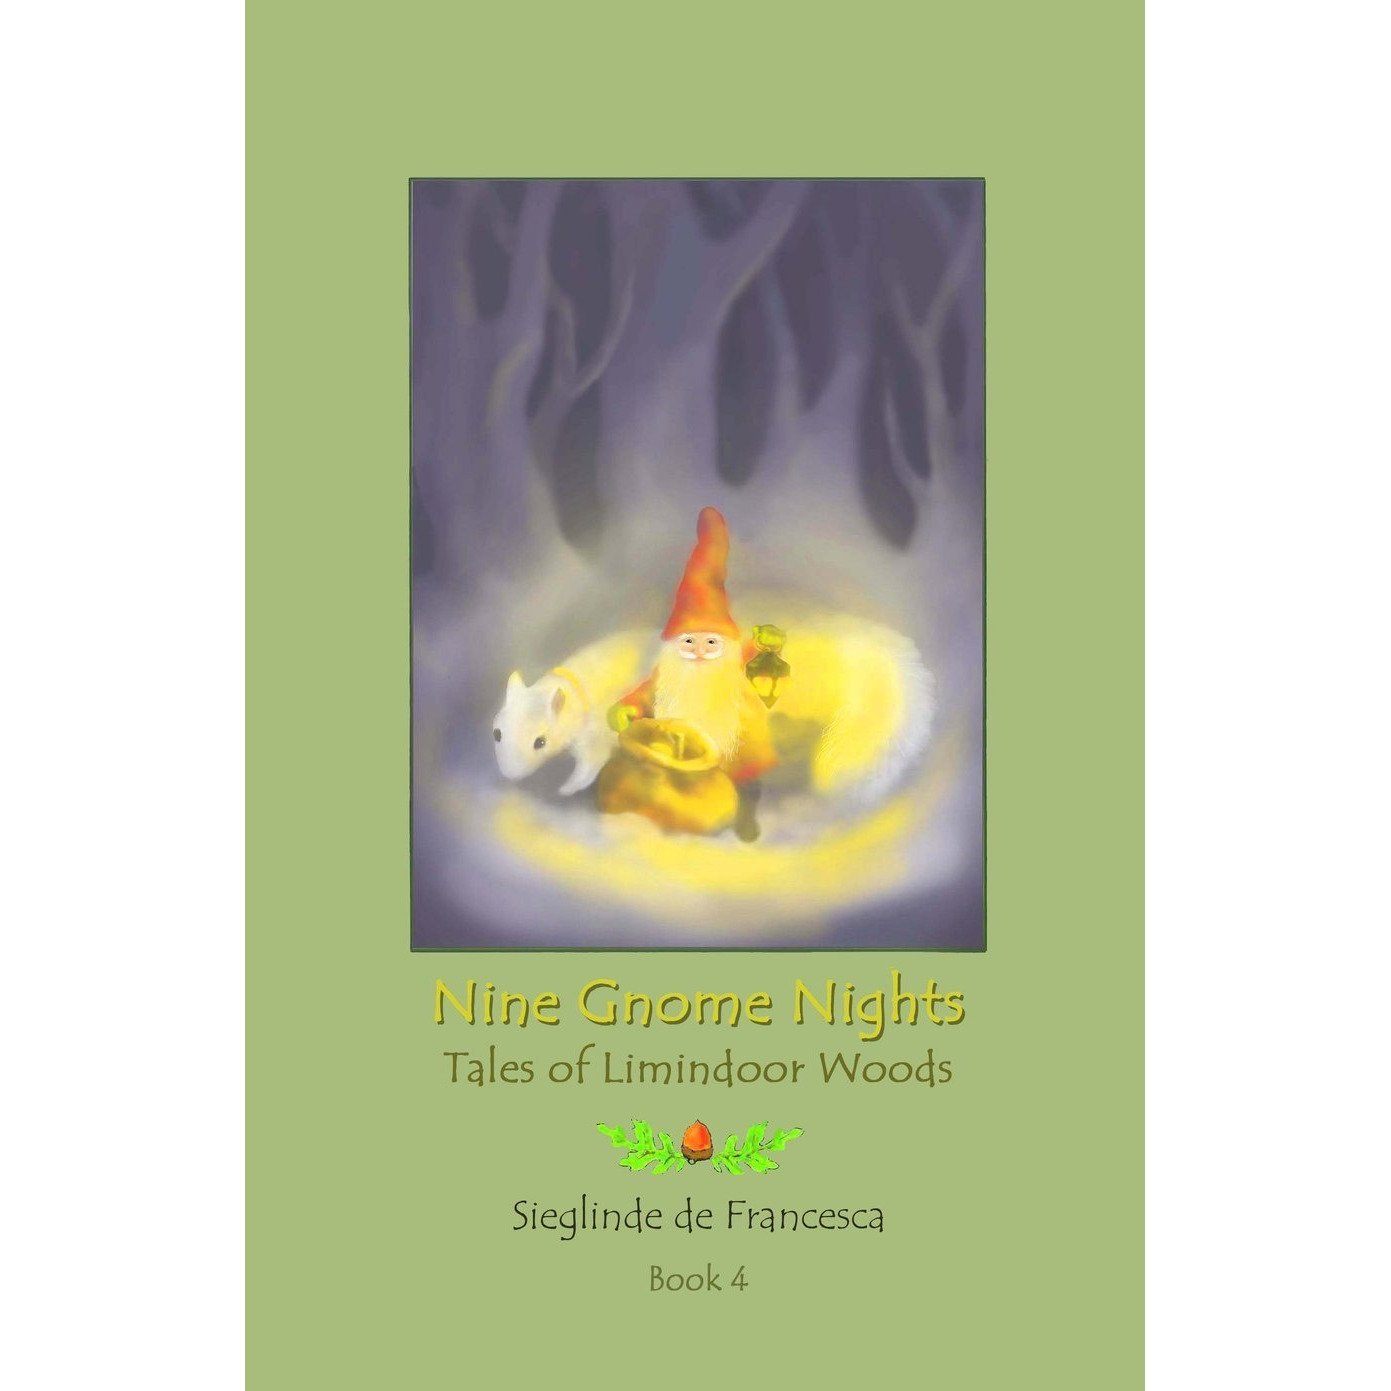 Nine Gnome Nights by Sieglinde de Francesca - Alder & Allouette